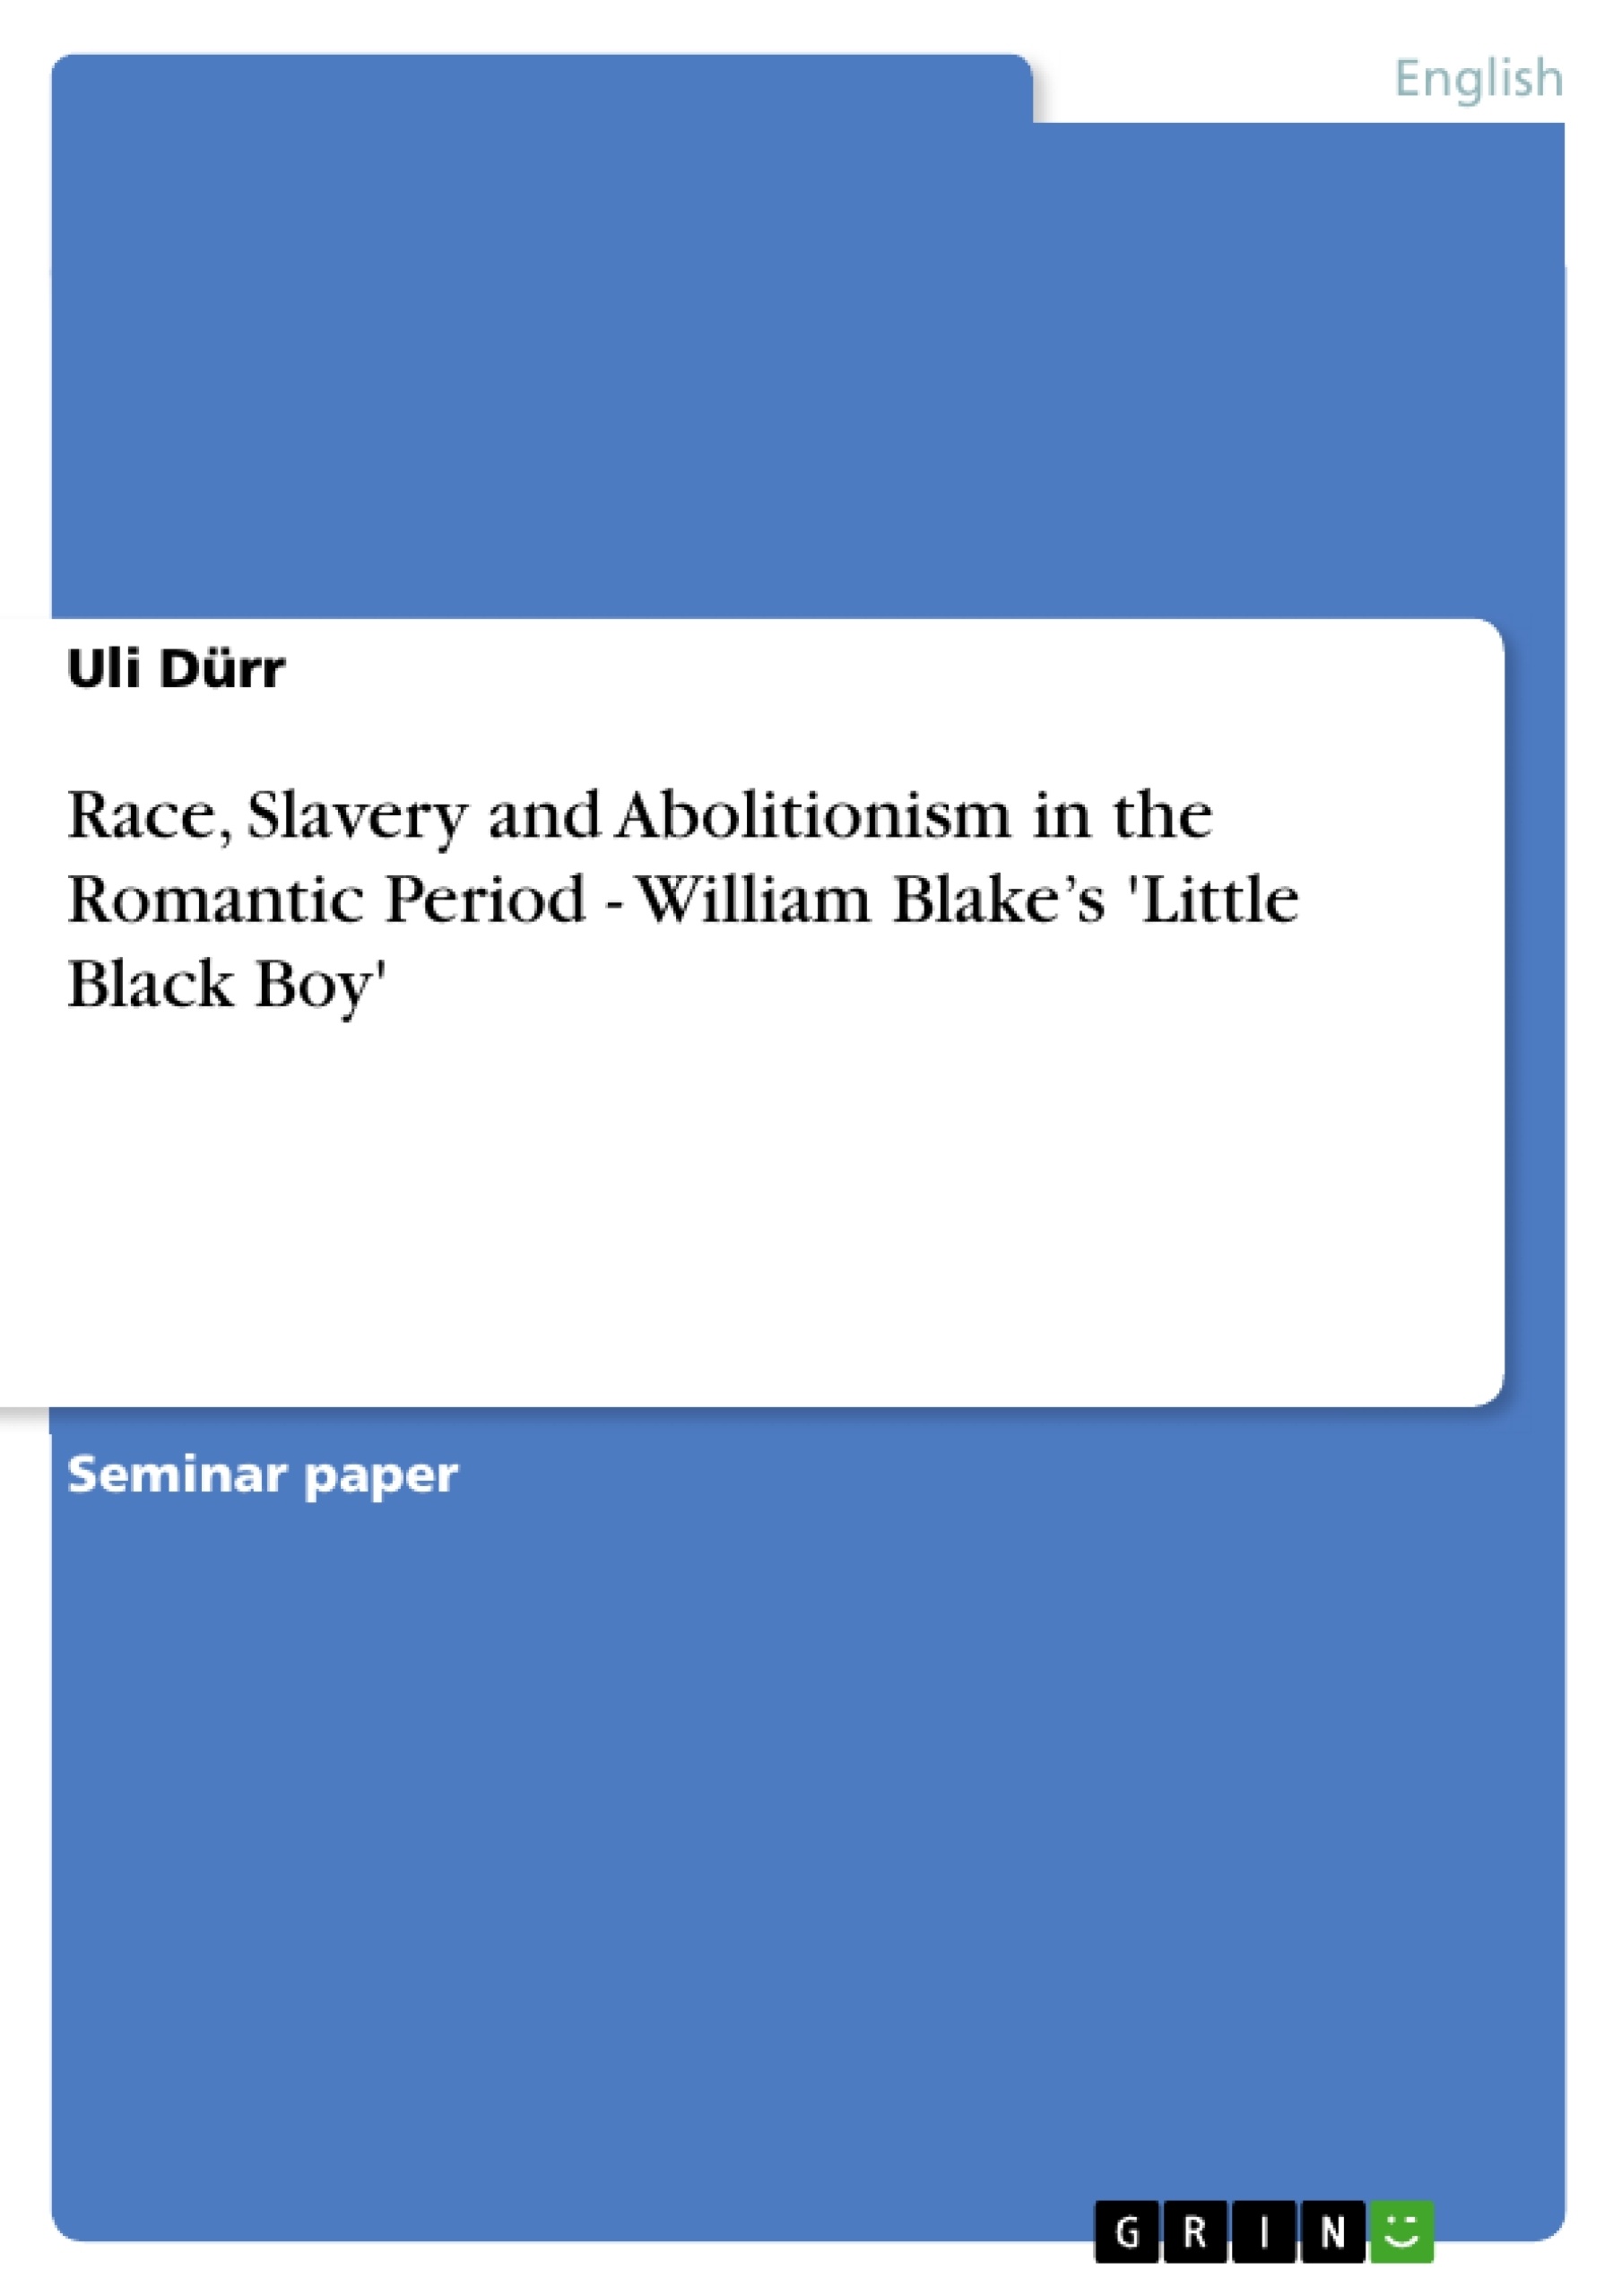 Essays on the romantic period